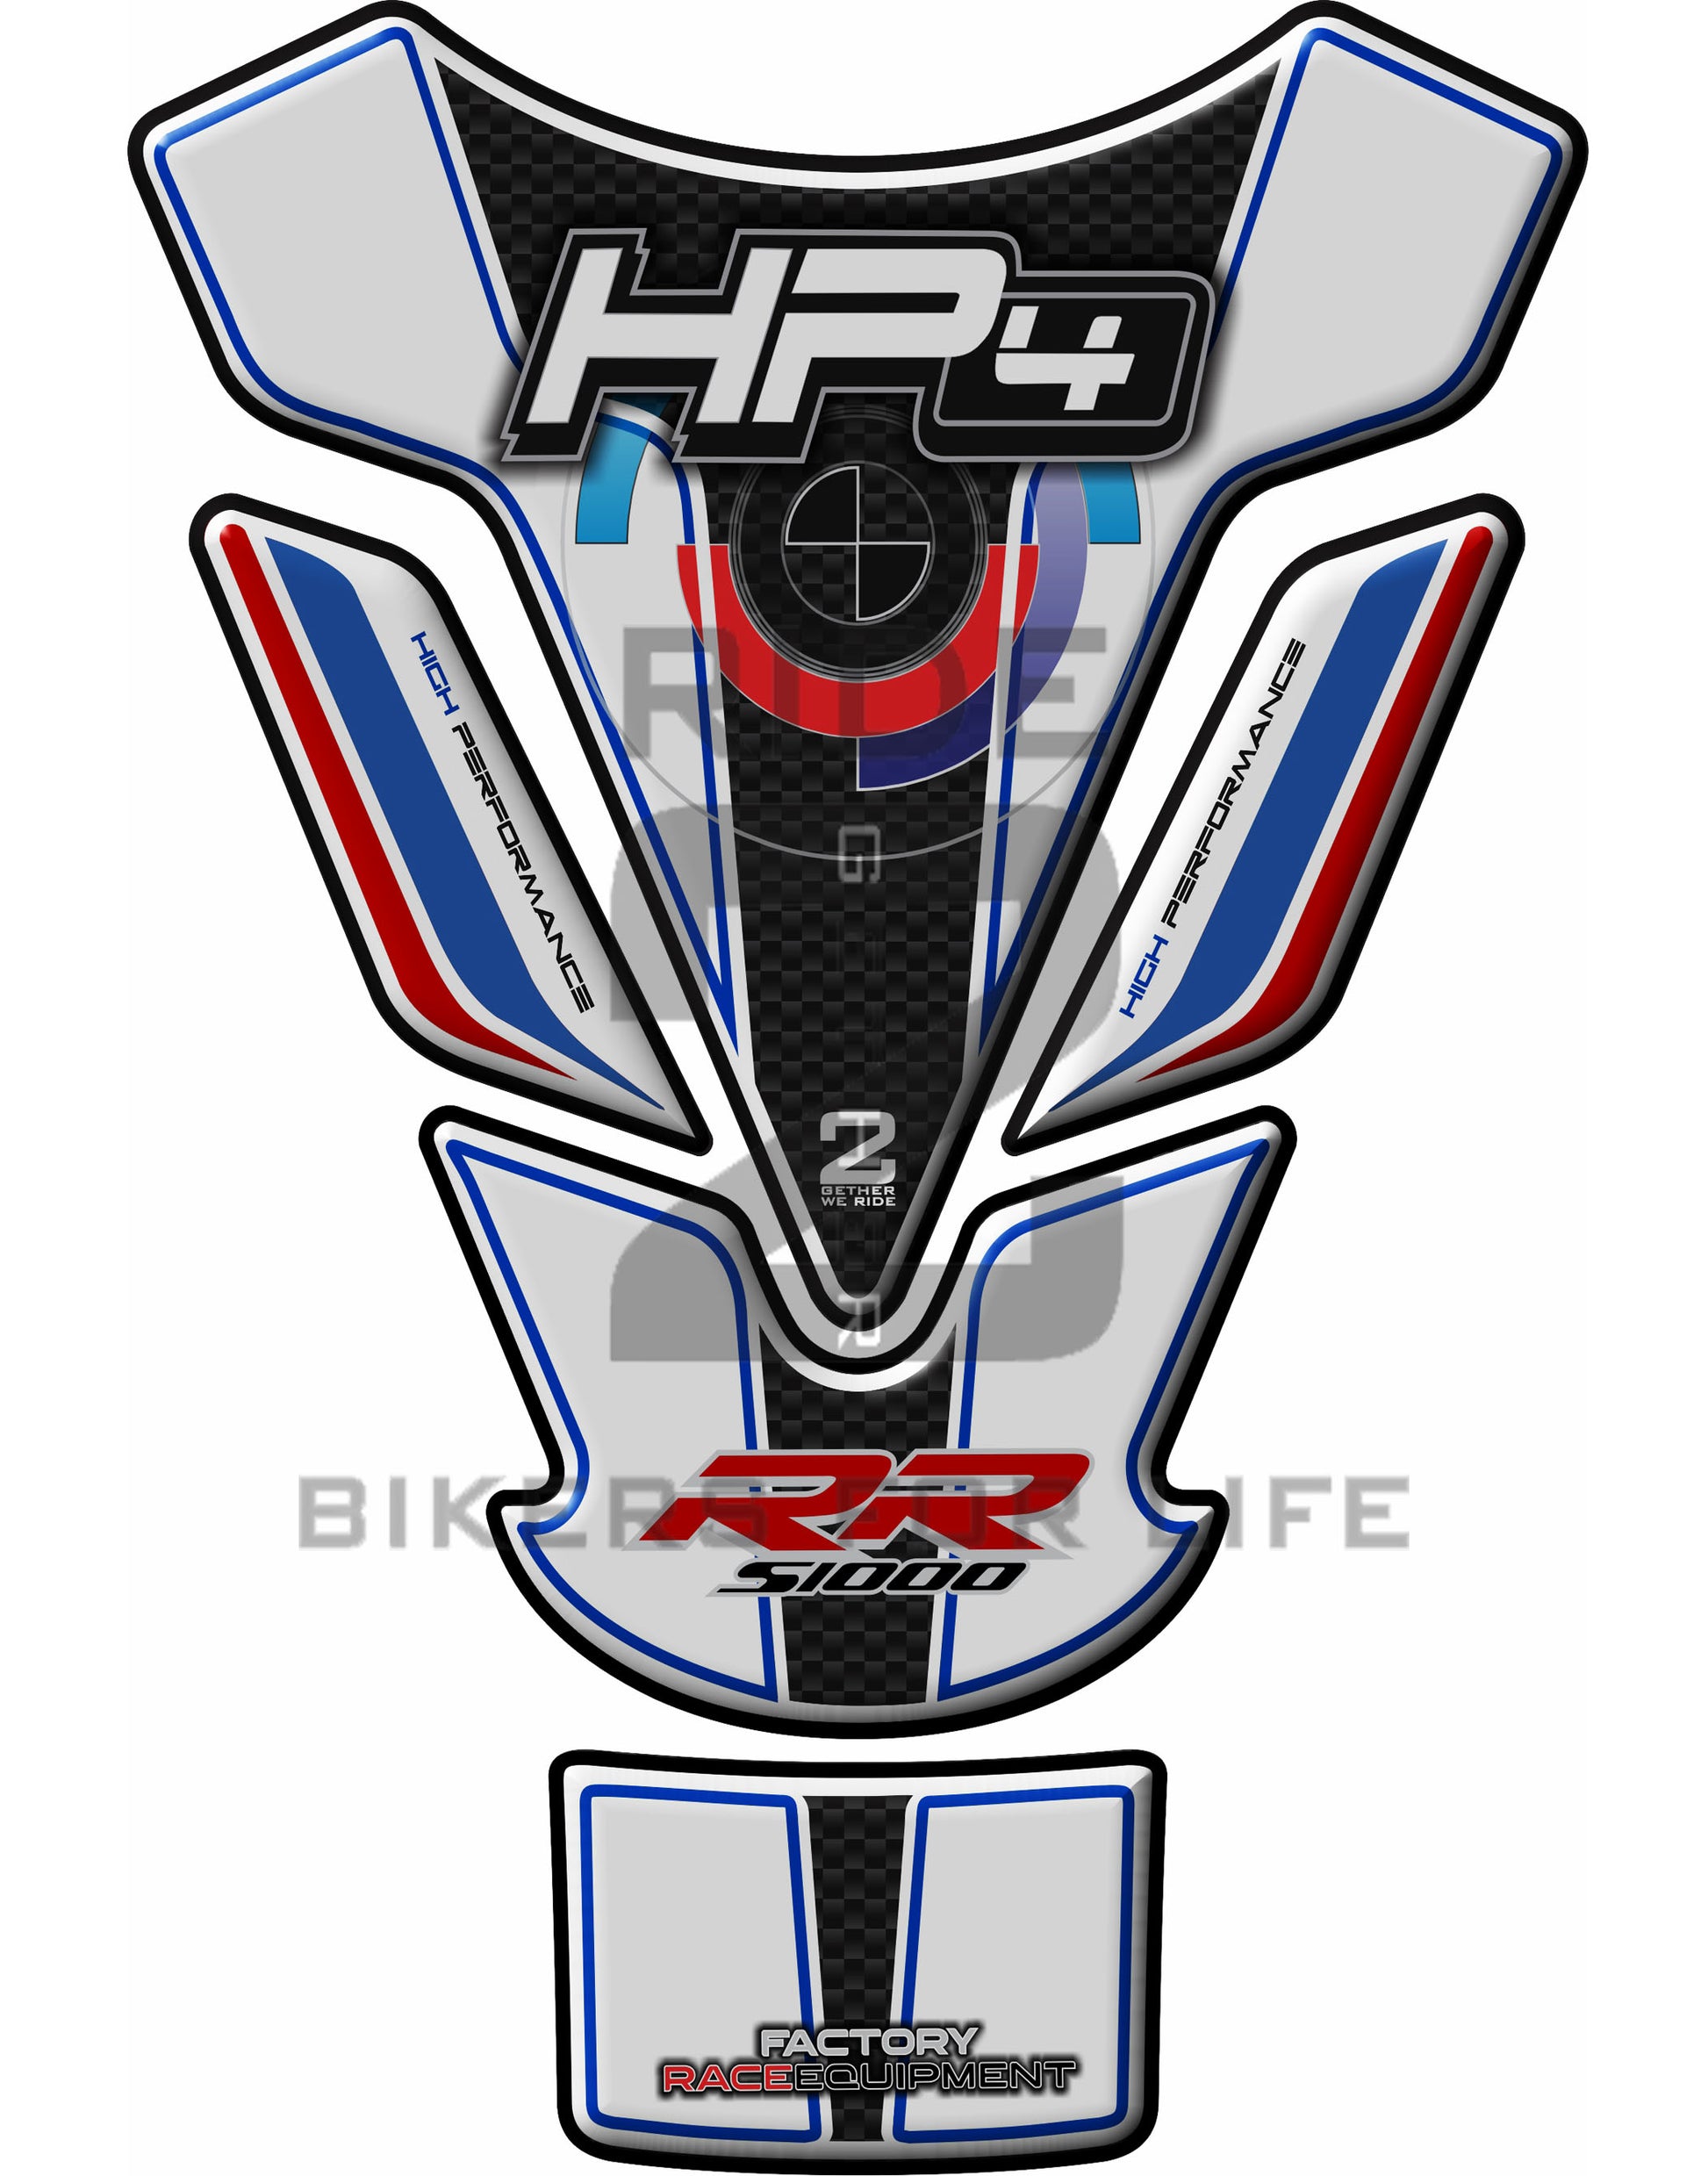 BMW S 1000 RR White  HP4 (High Performance) Motor Bike Tank Pad  Protector.   2013- 2015